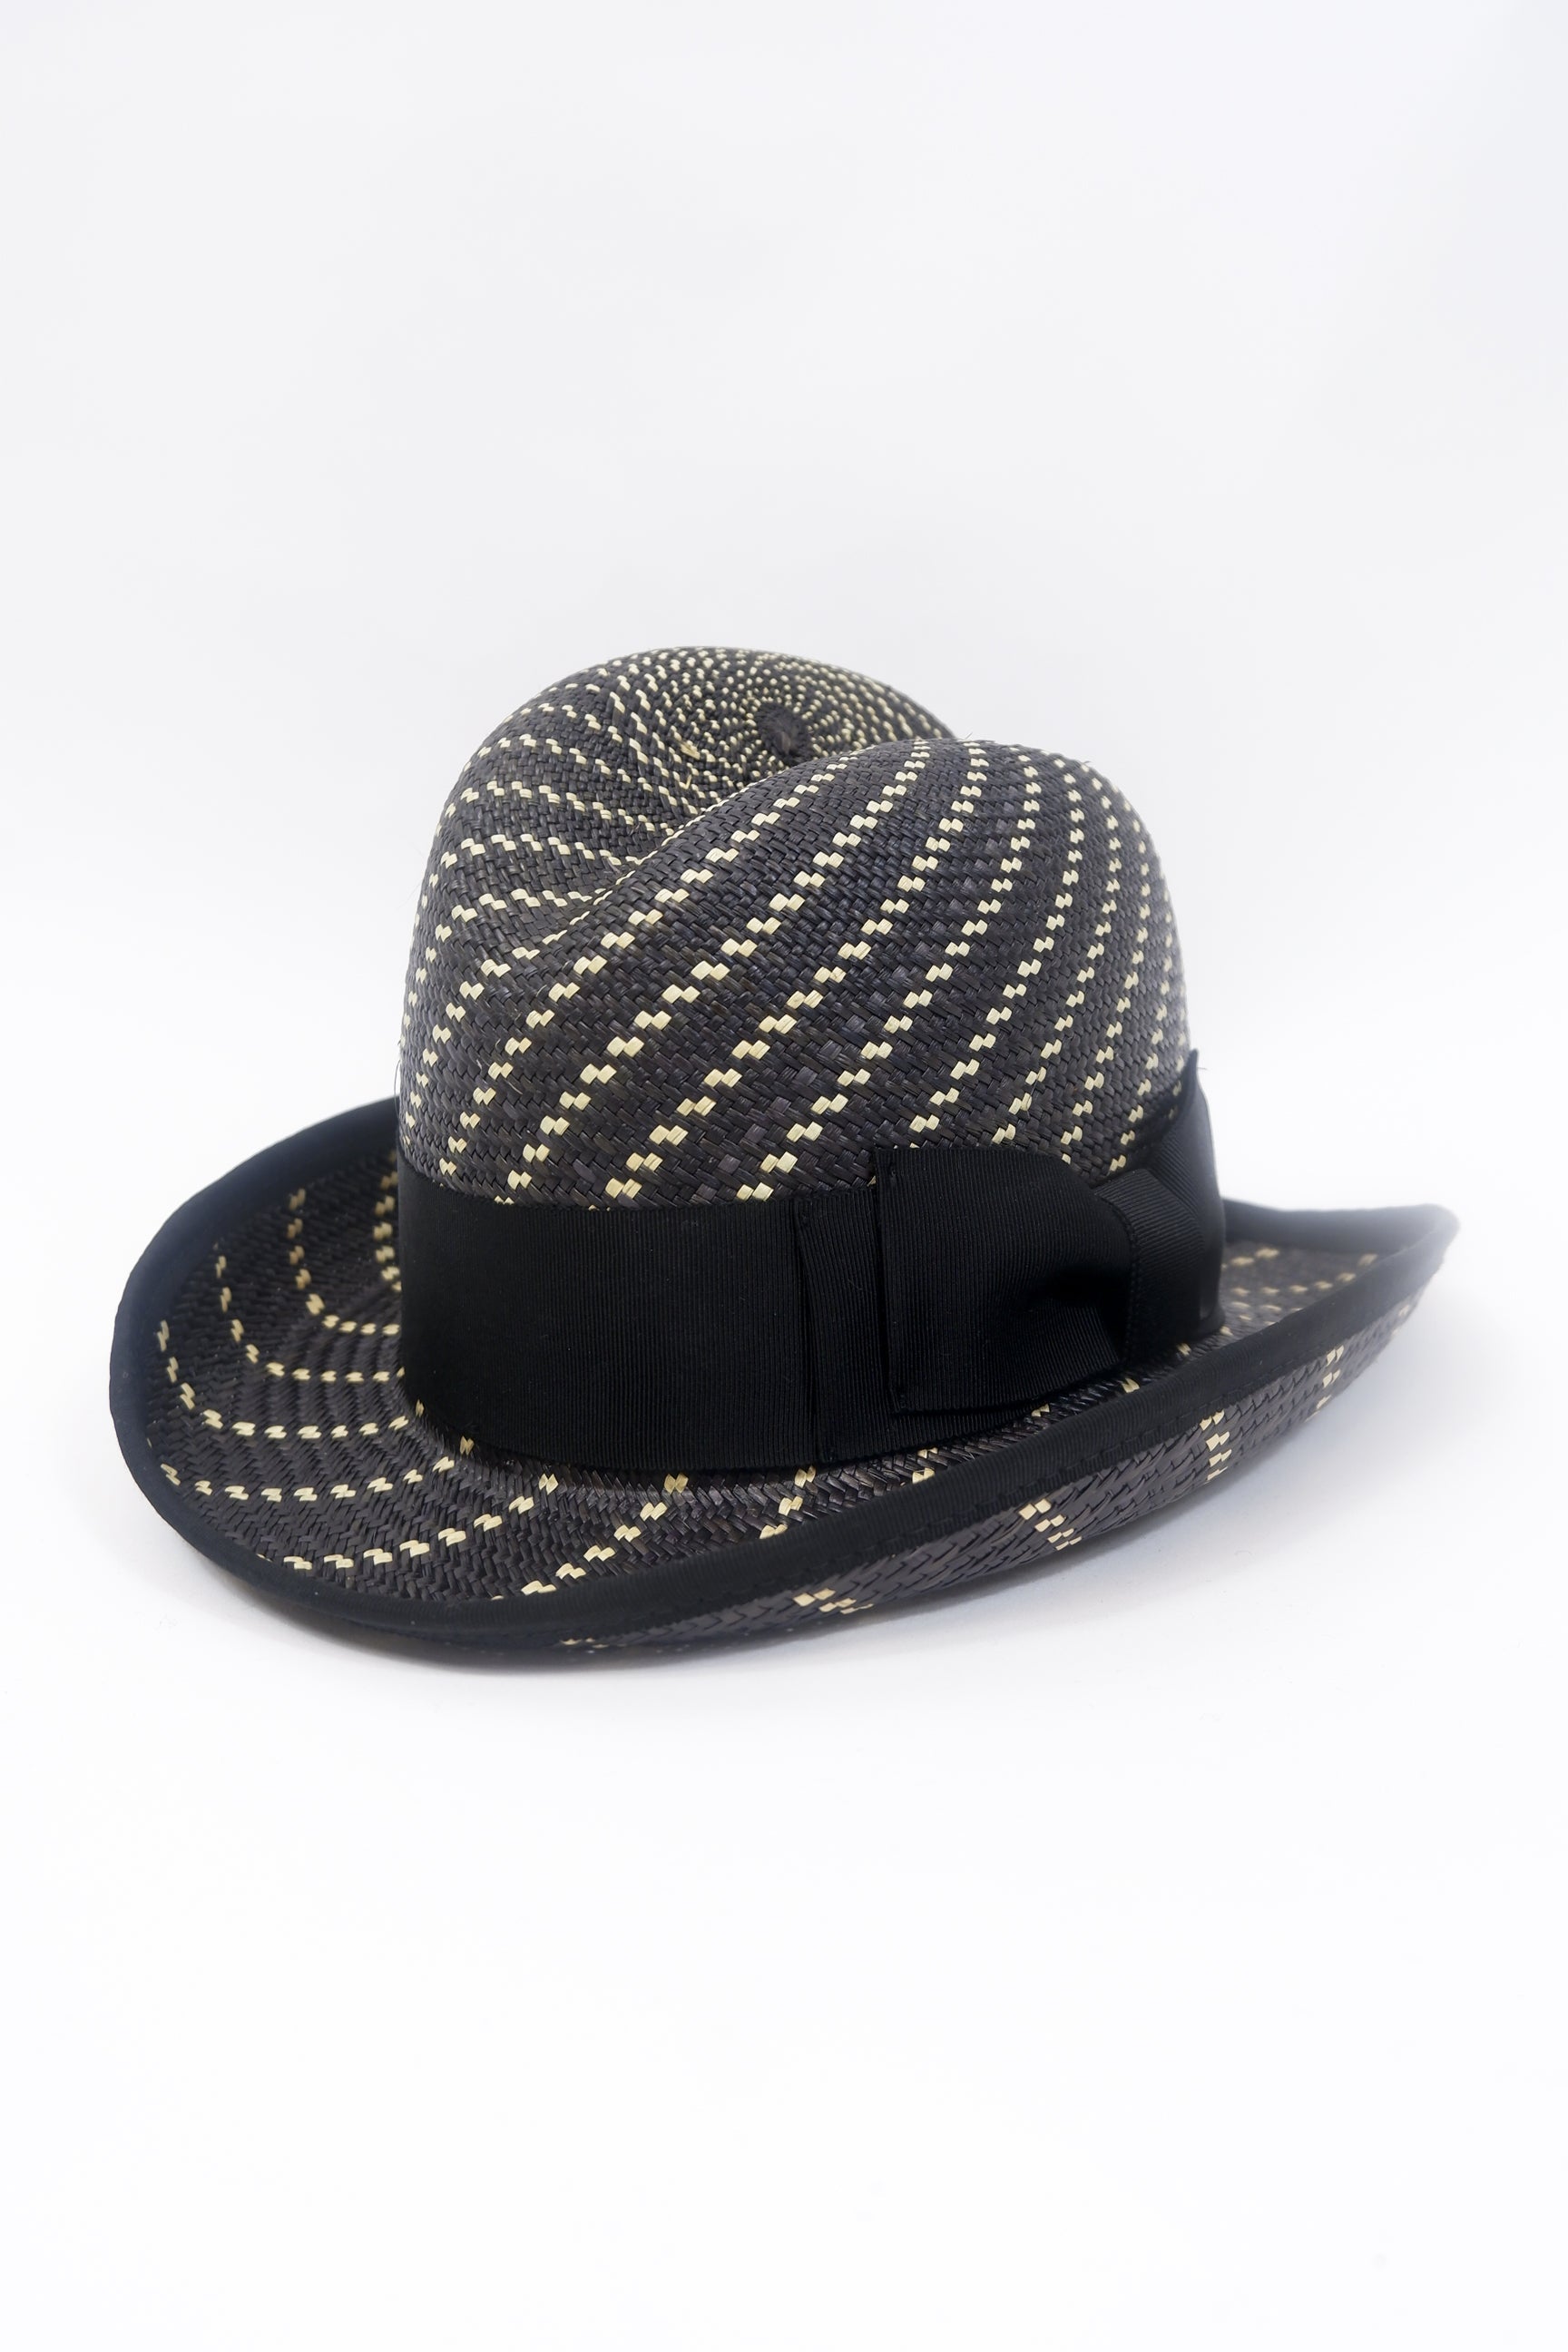 PANAMA FLASH TIPPER - CLASSIC BLACK TWIST-hats-A Child Of The Jago